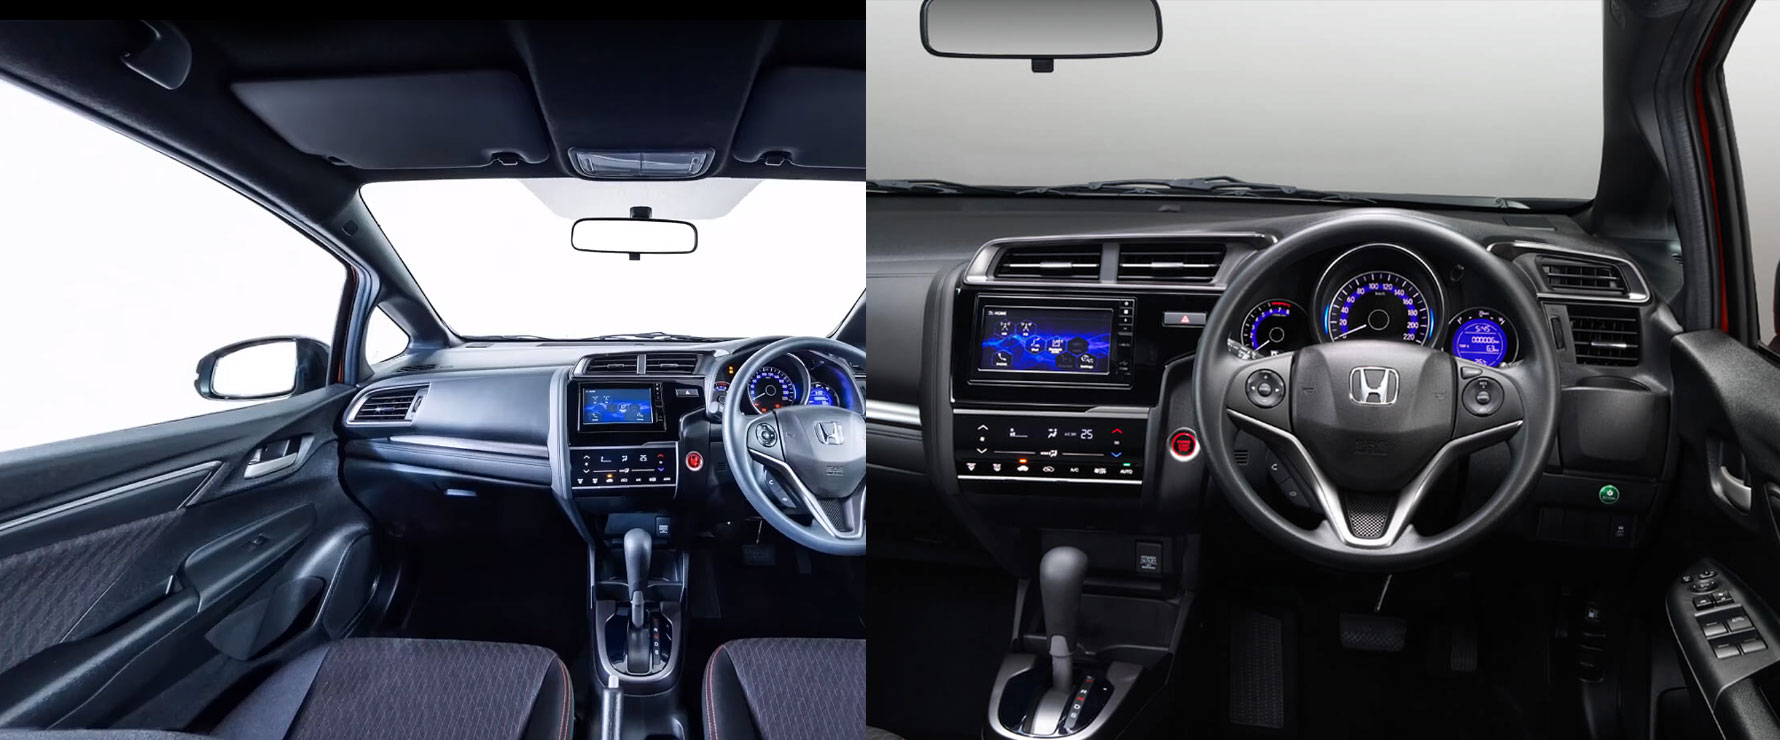 Honda-Jazz-RS-Facelift-Thailand-Interior